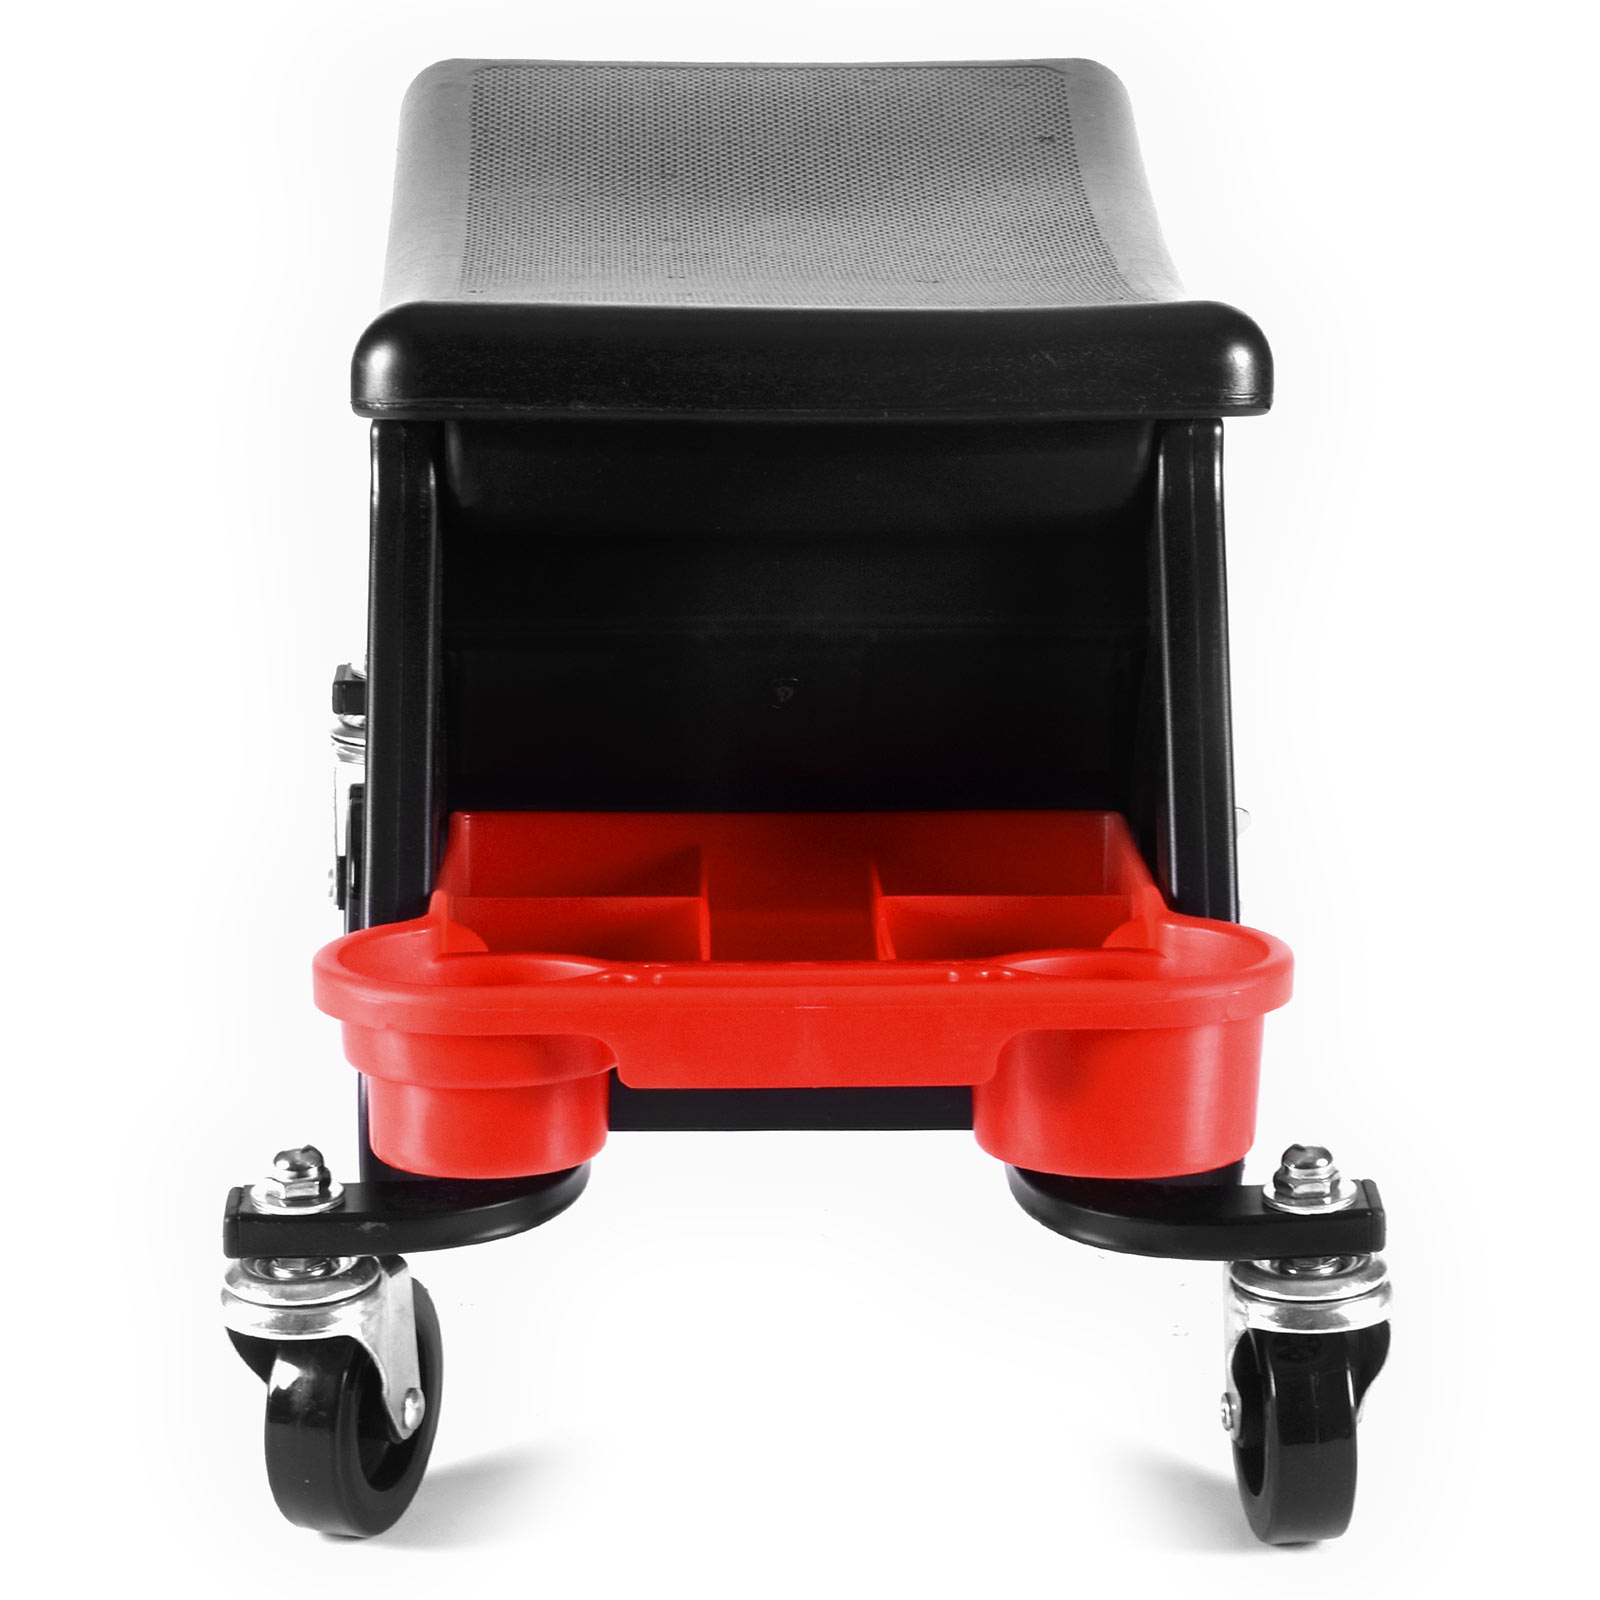 Biltek Heavy-Duty Rolling Garage Shop Mechanic Creeper Stool Chair, Includes Tools Storage Trays, Durable 300lbs Capacity, Black